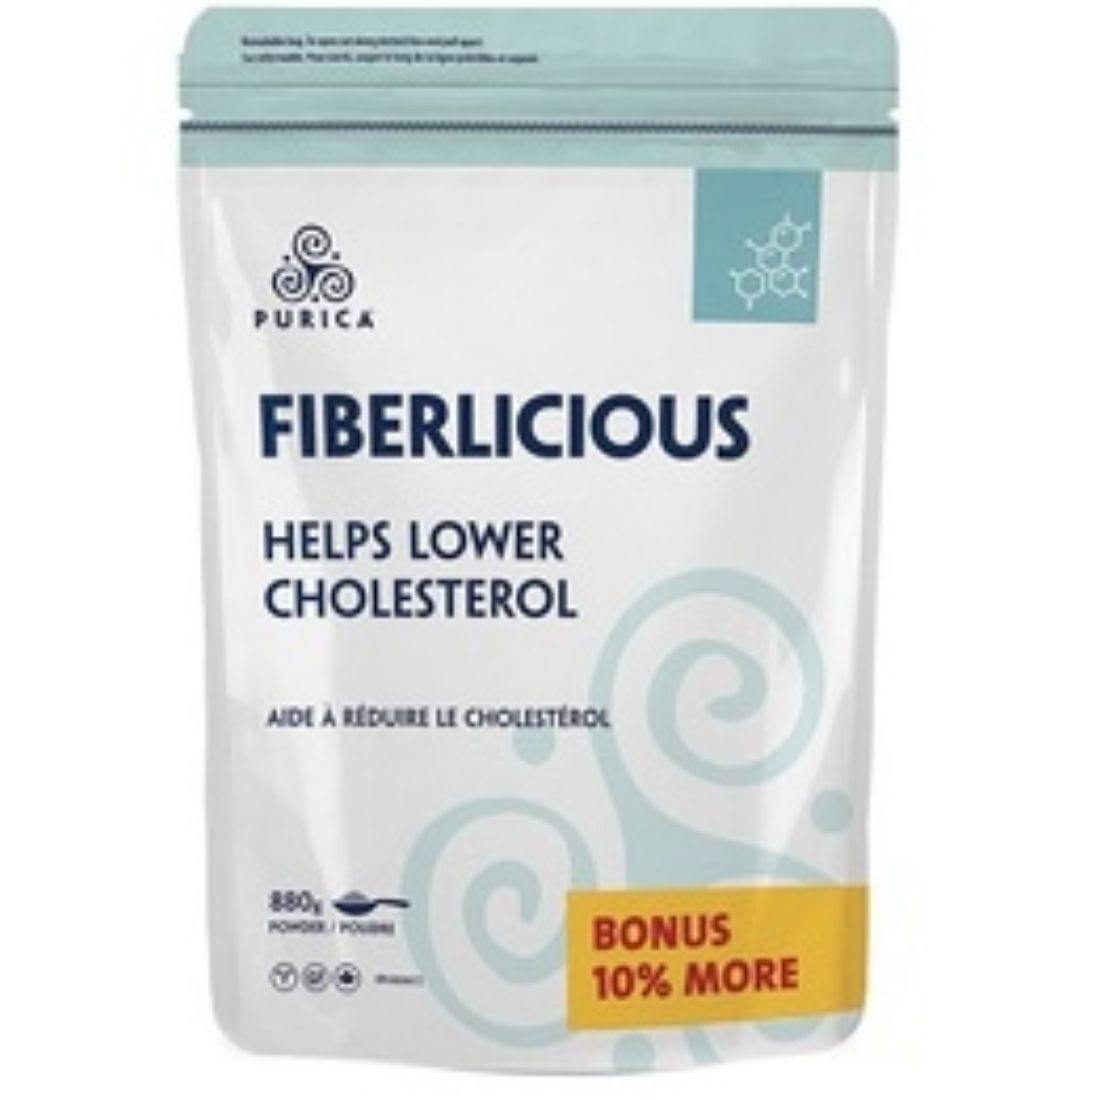 Purica Fiberlicious Powder (100% Pure Chicory Root Extract)